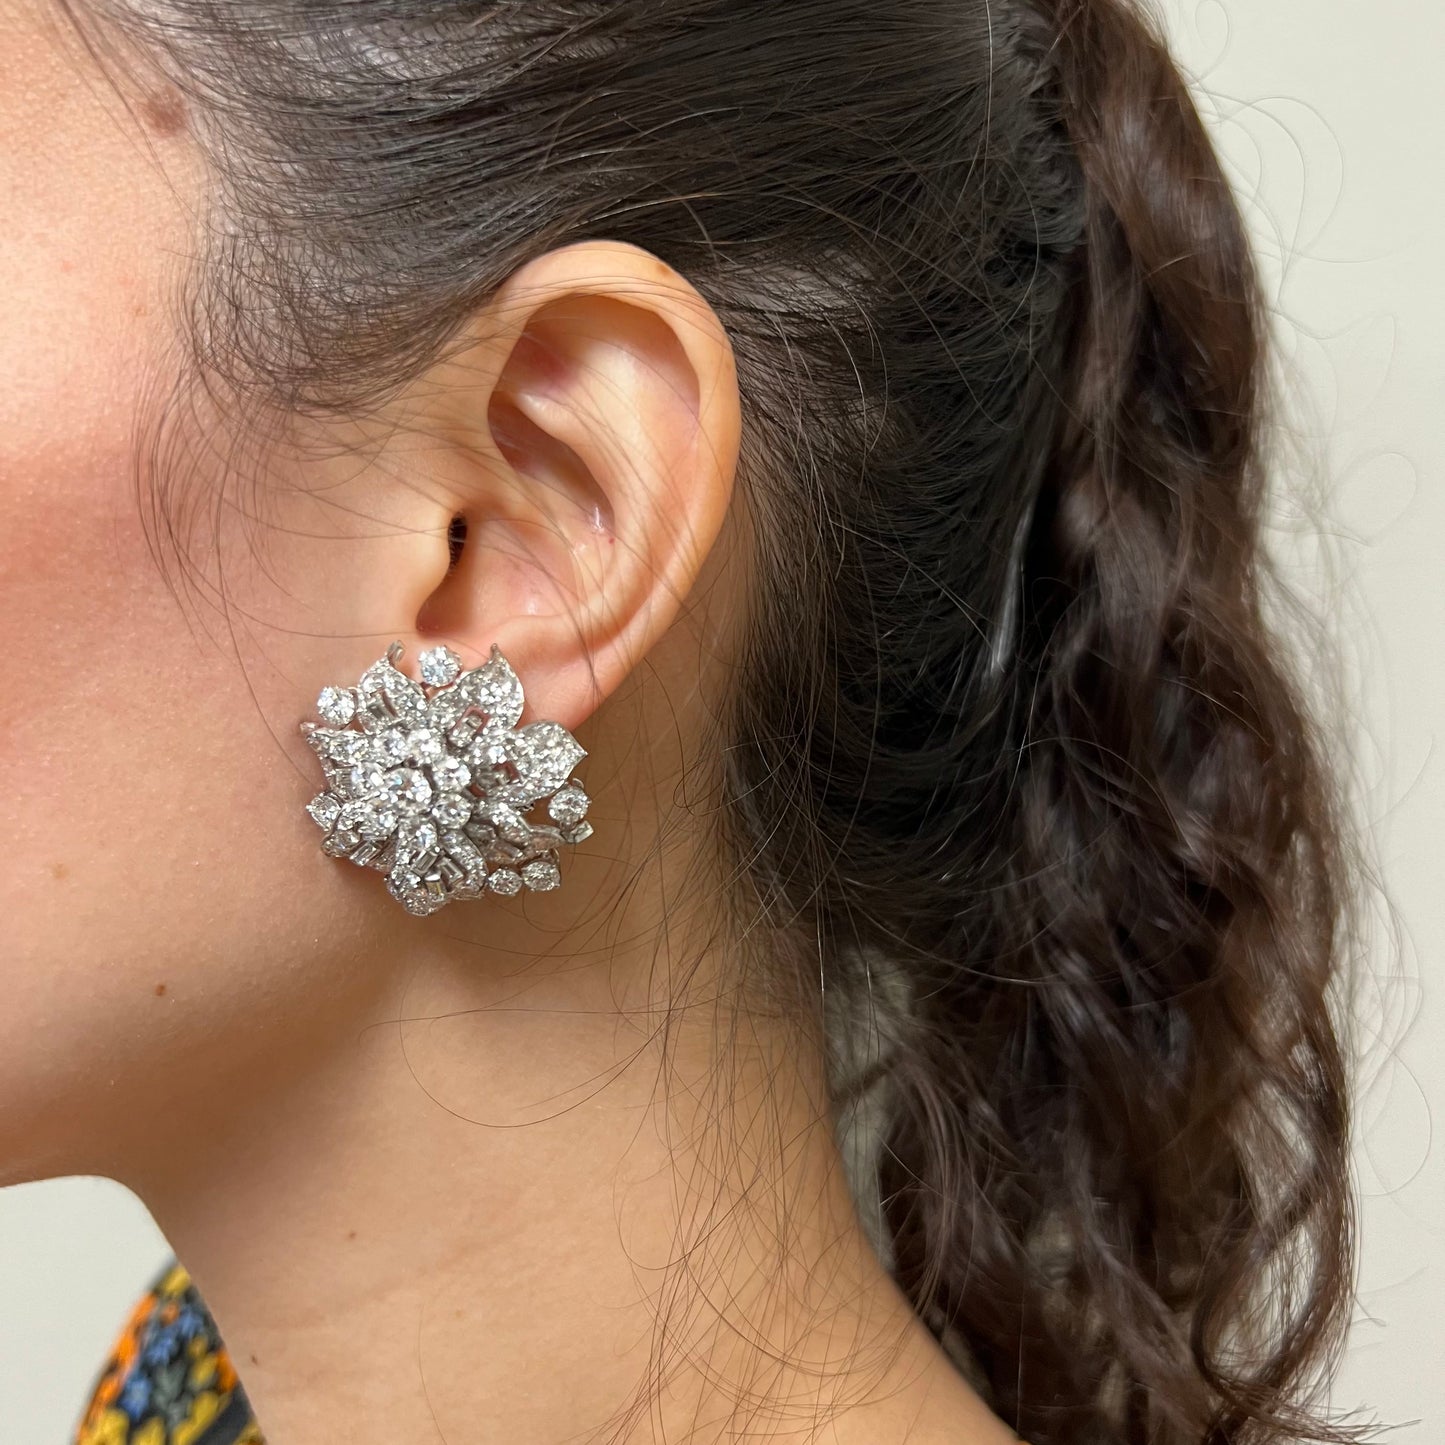 Bulgari 1960s Platinum Diamond Earrings worn on ear